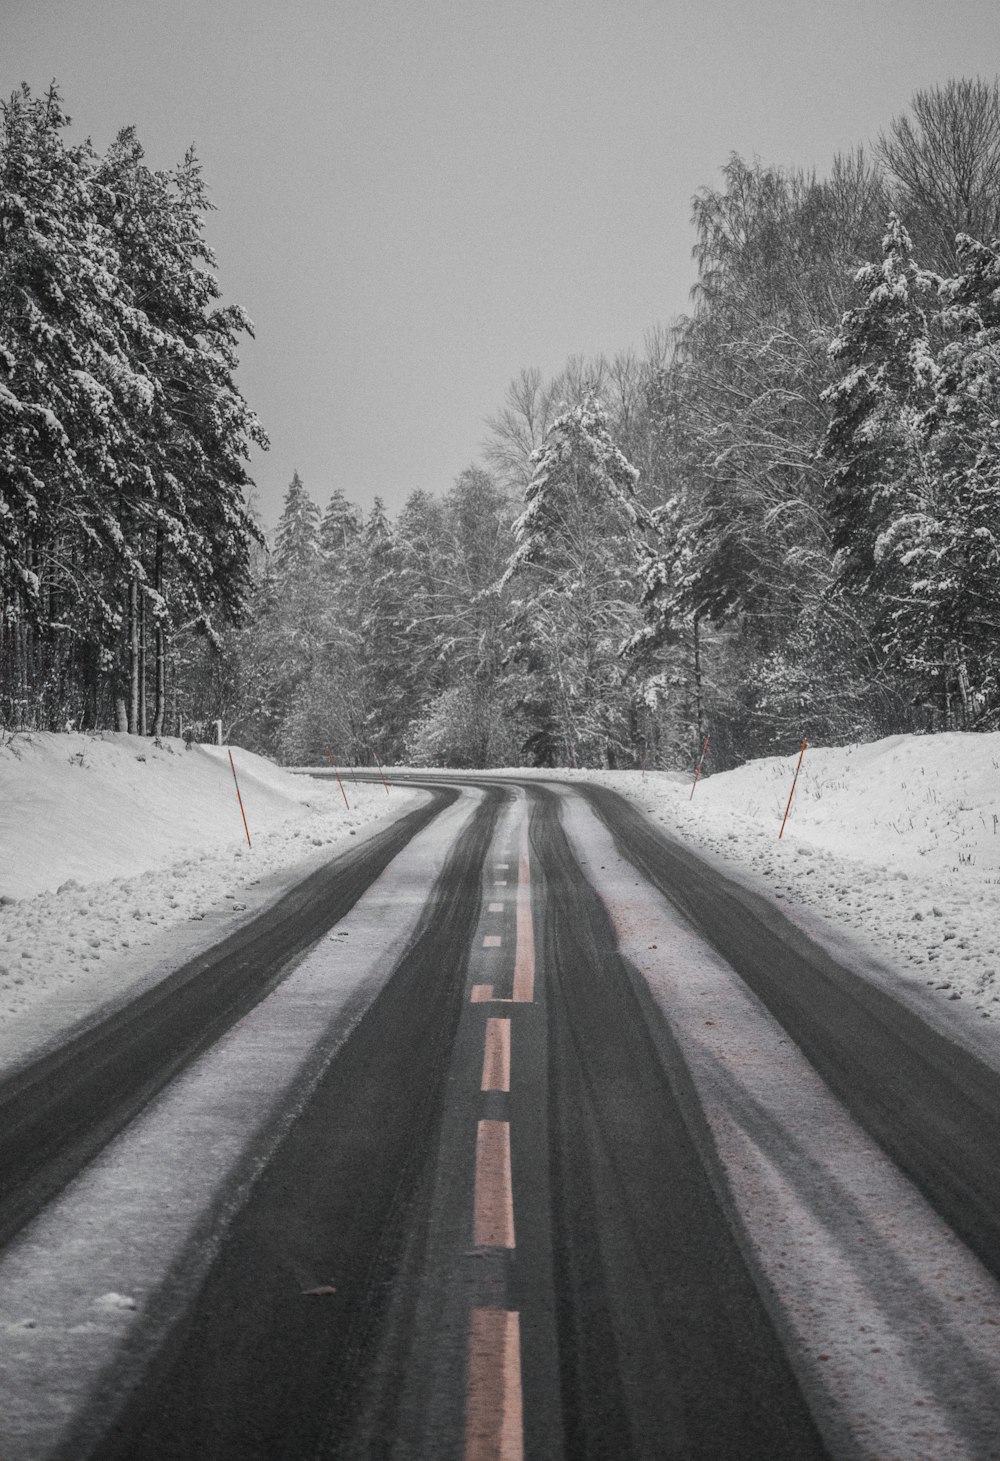 Carretera de asfalto negro entre árboles cubiertos de nieve